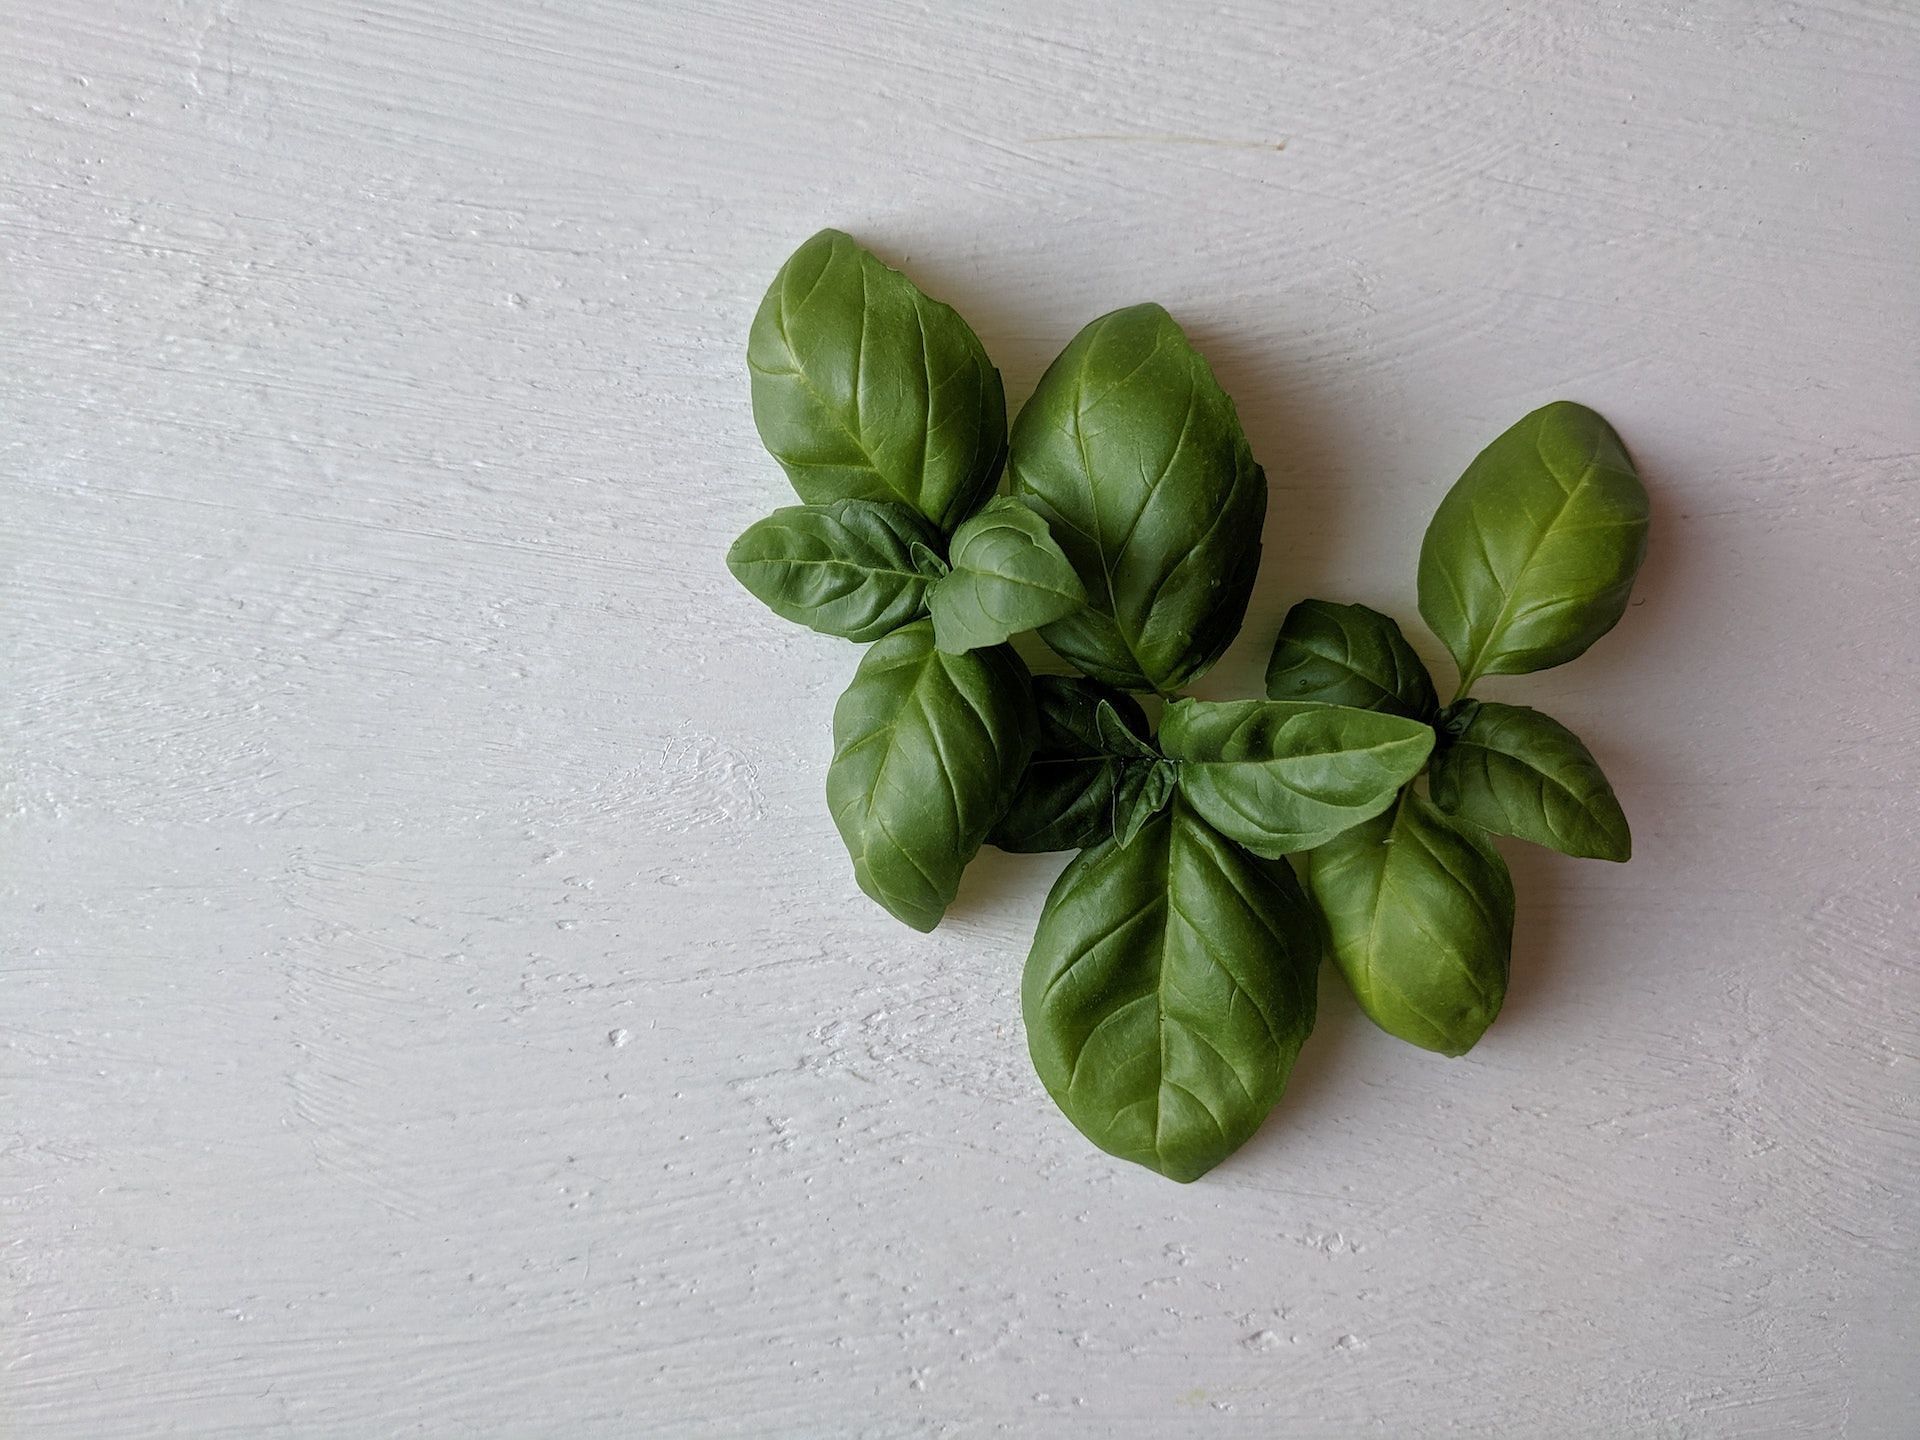 Holy basil is among amazing herbs to lower cholesterol. (Photo via Pexels/Asya Vlasova)